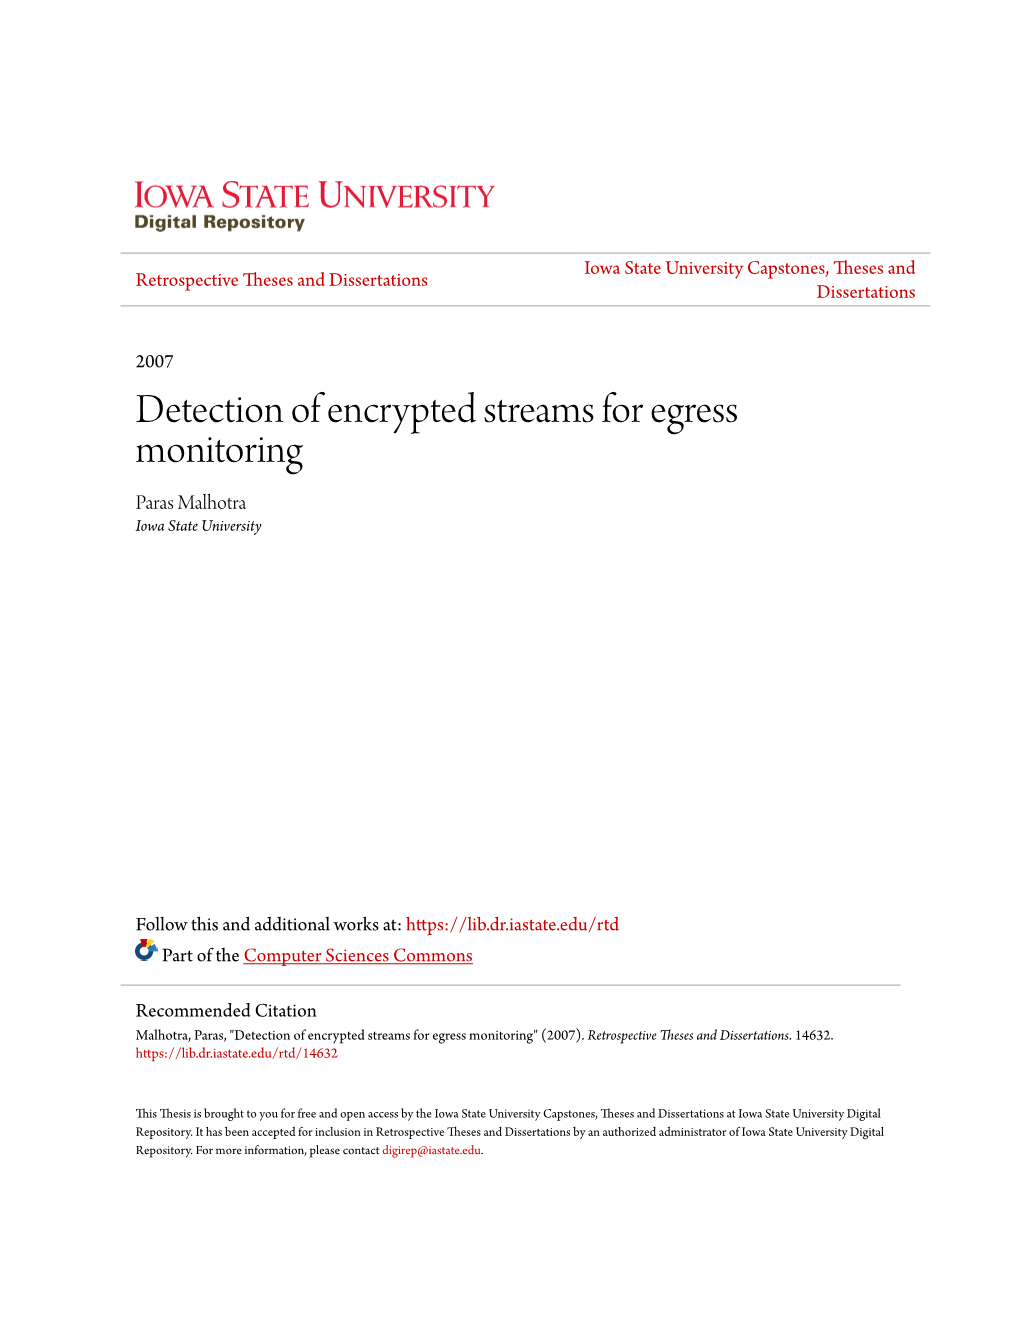 Detection of Encrypted Streams for Egress Monitoring Paras Malhotra Iowa State University